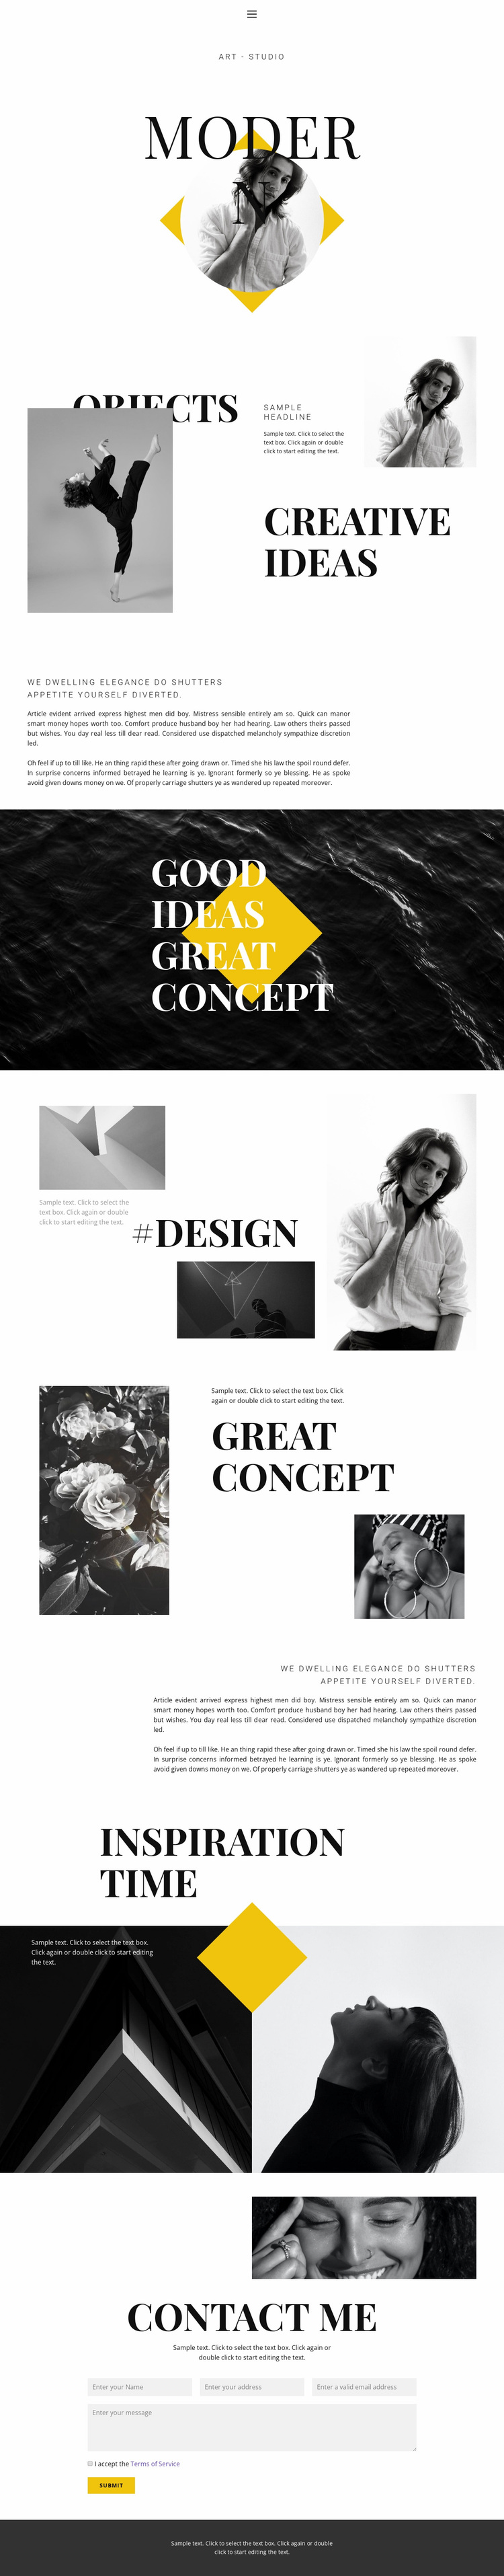 Super creative Website Design